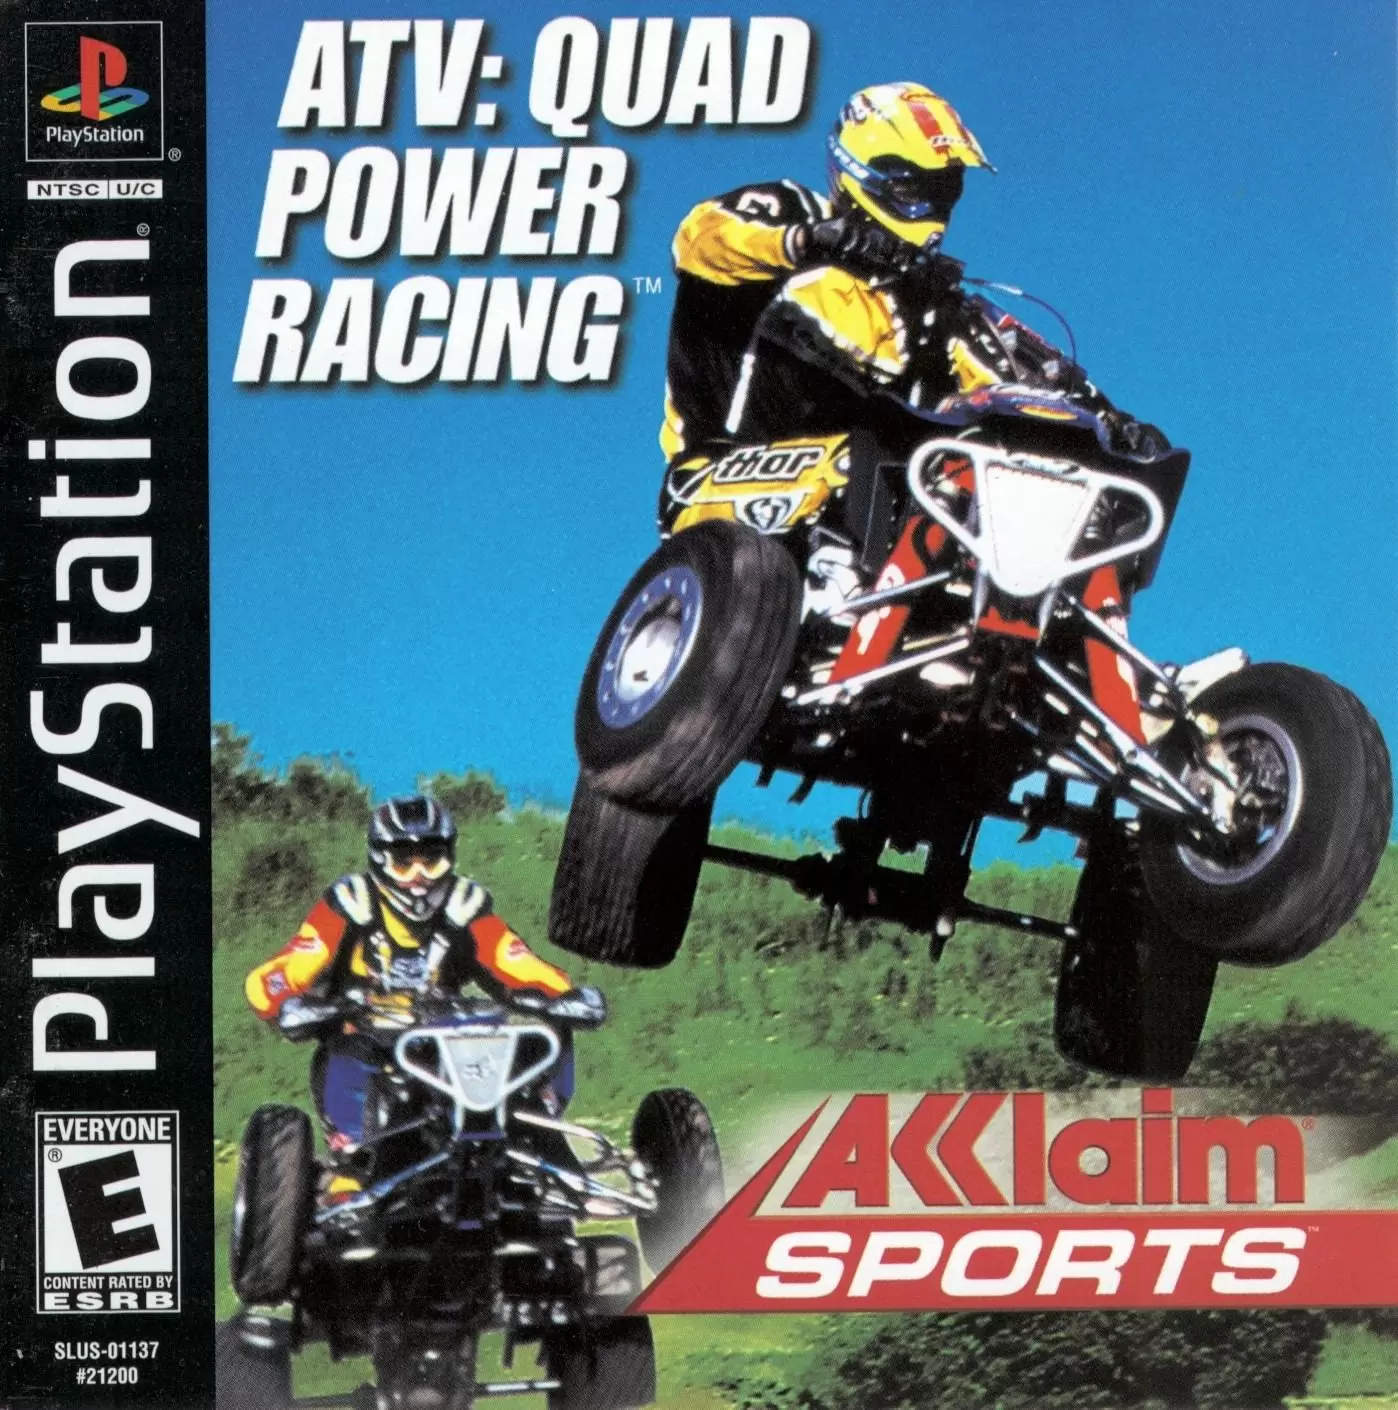 Playstation games - ATV Quad Power Racing